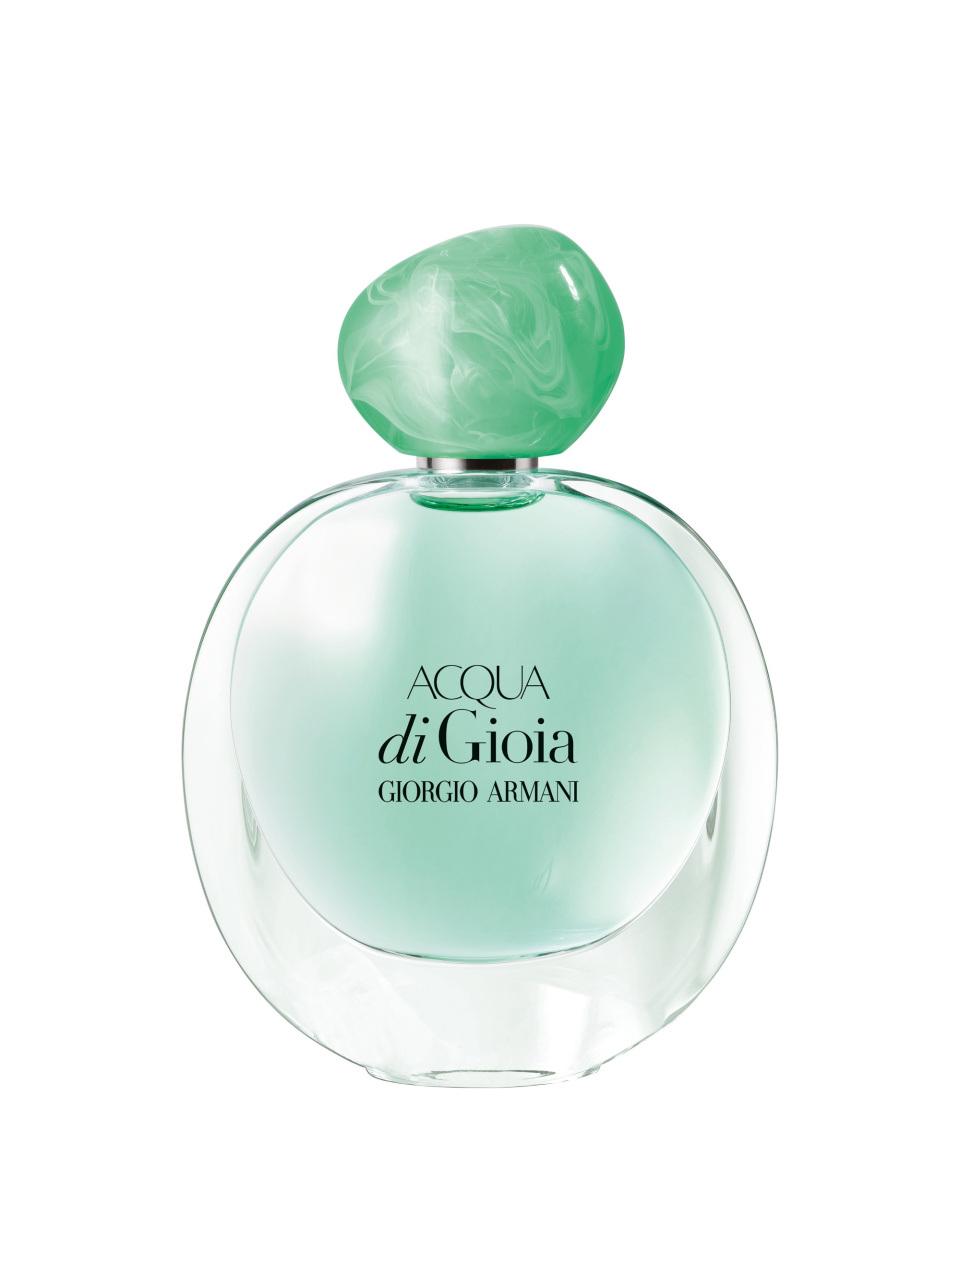 Giorgio Armani Acqua di Gioia Woman, femme woman, Eau de Parfum, Vaporisateur Spray, 30 ml